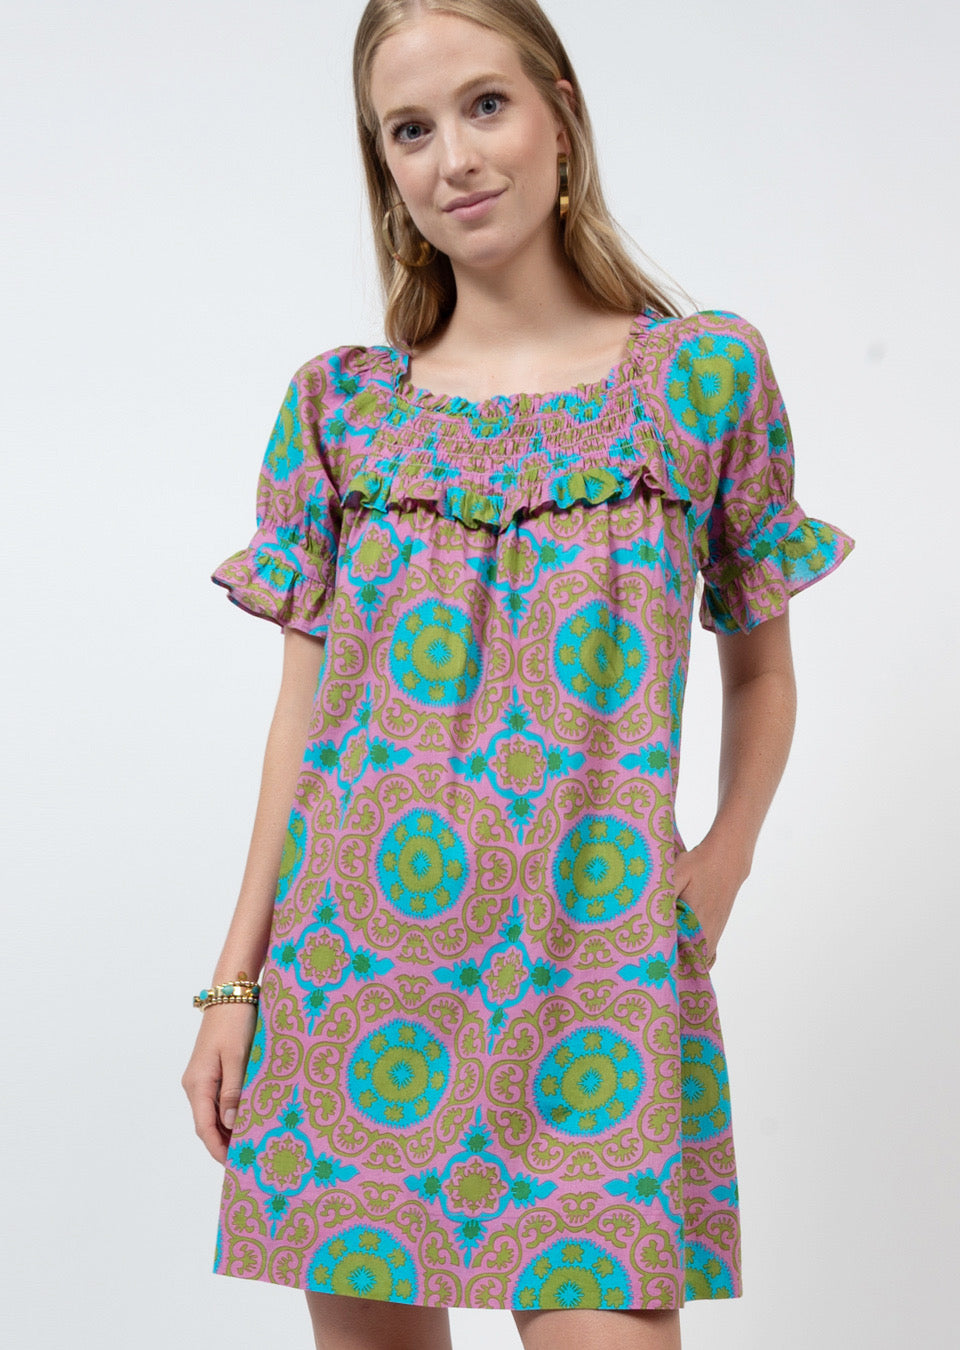 Smocked Tile Print Dress